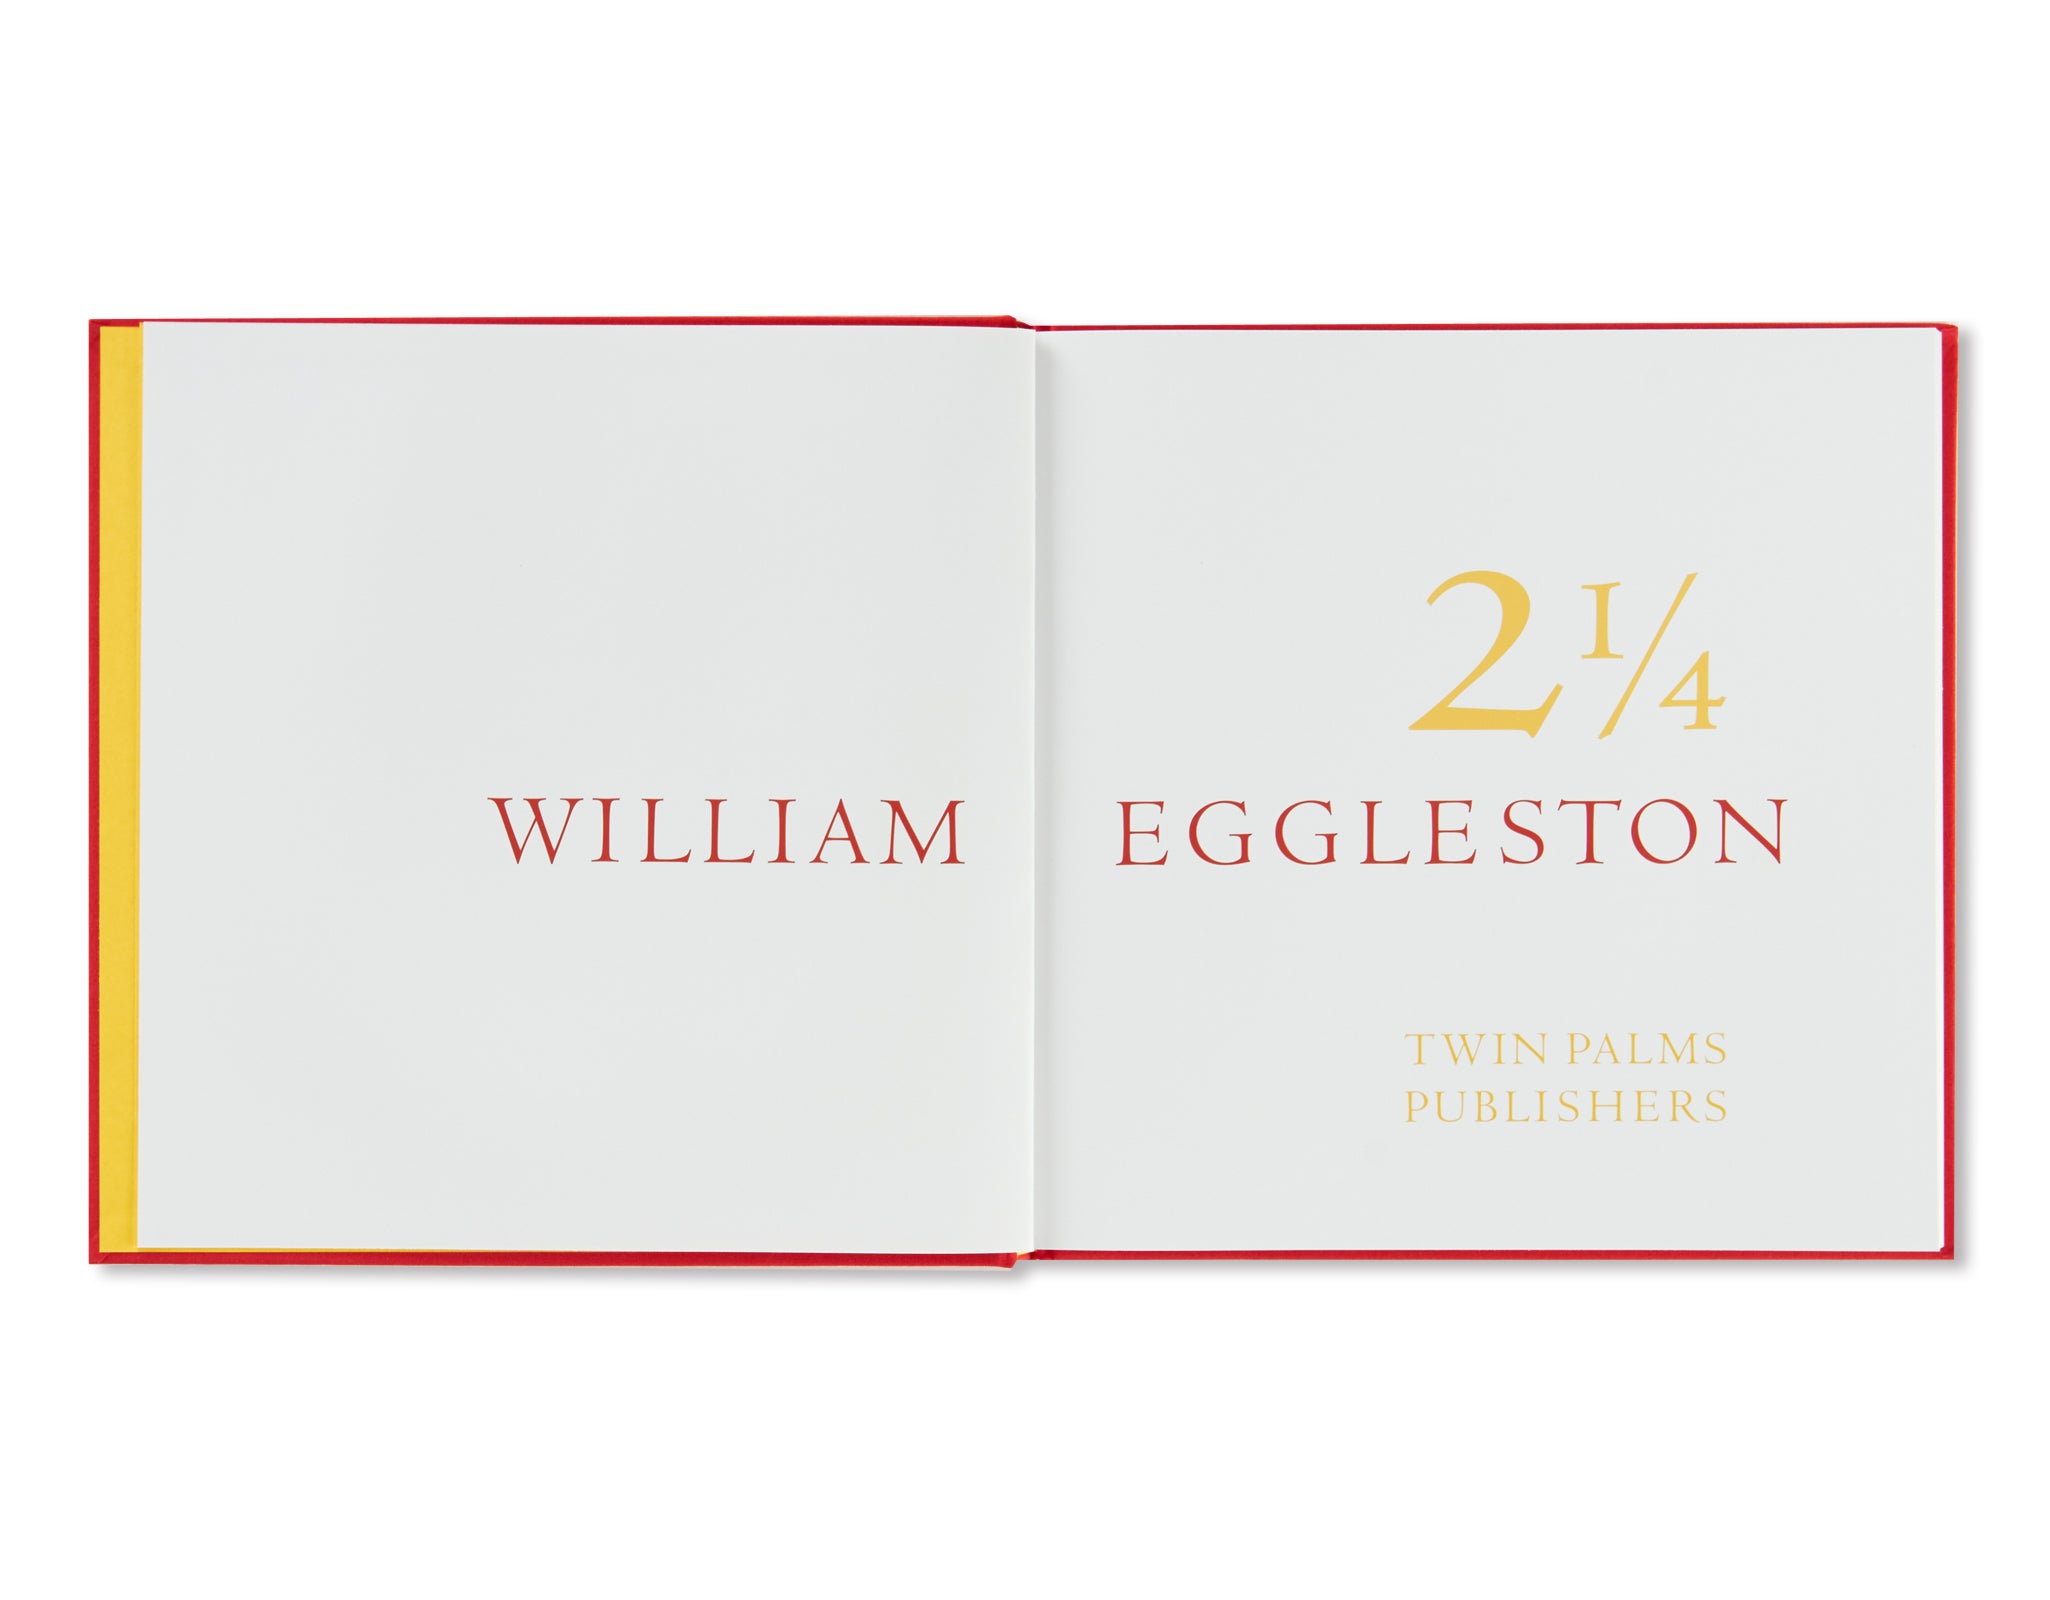 2 1/4 by William Eggleston